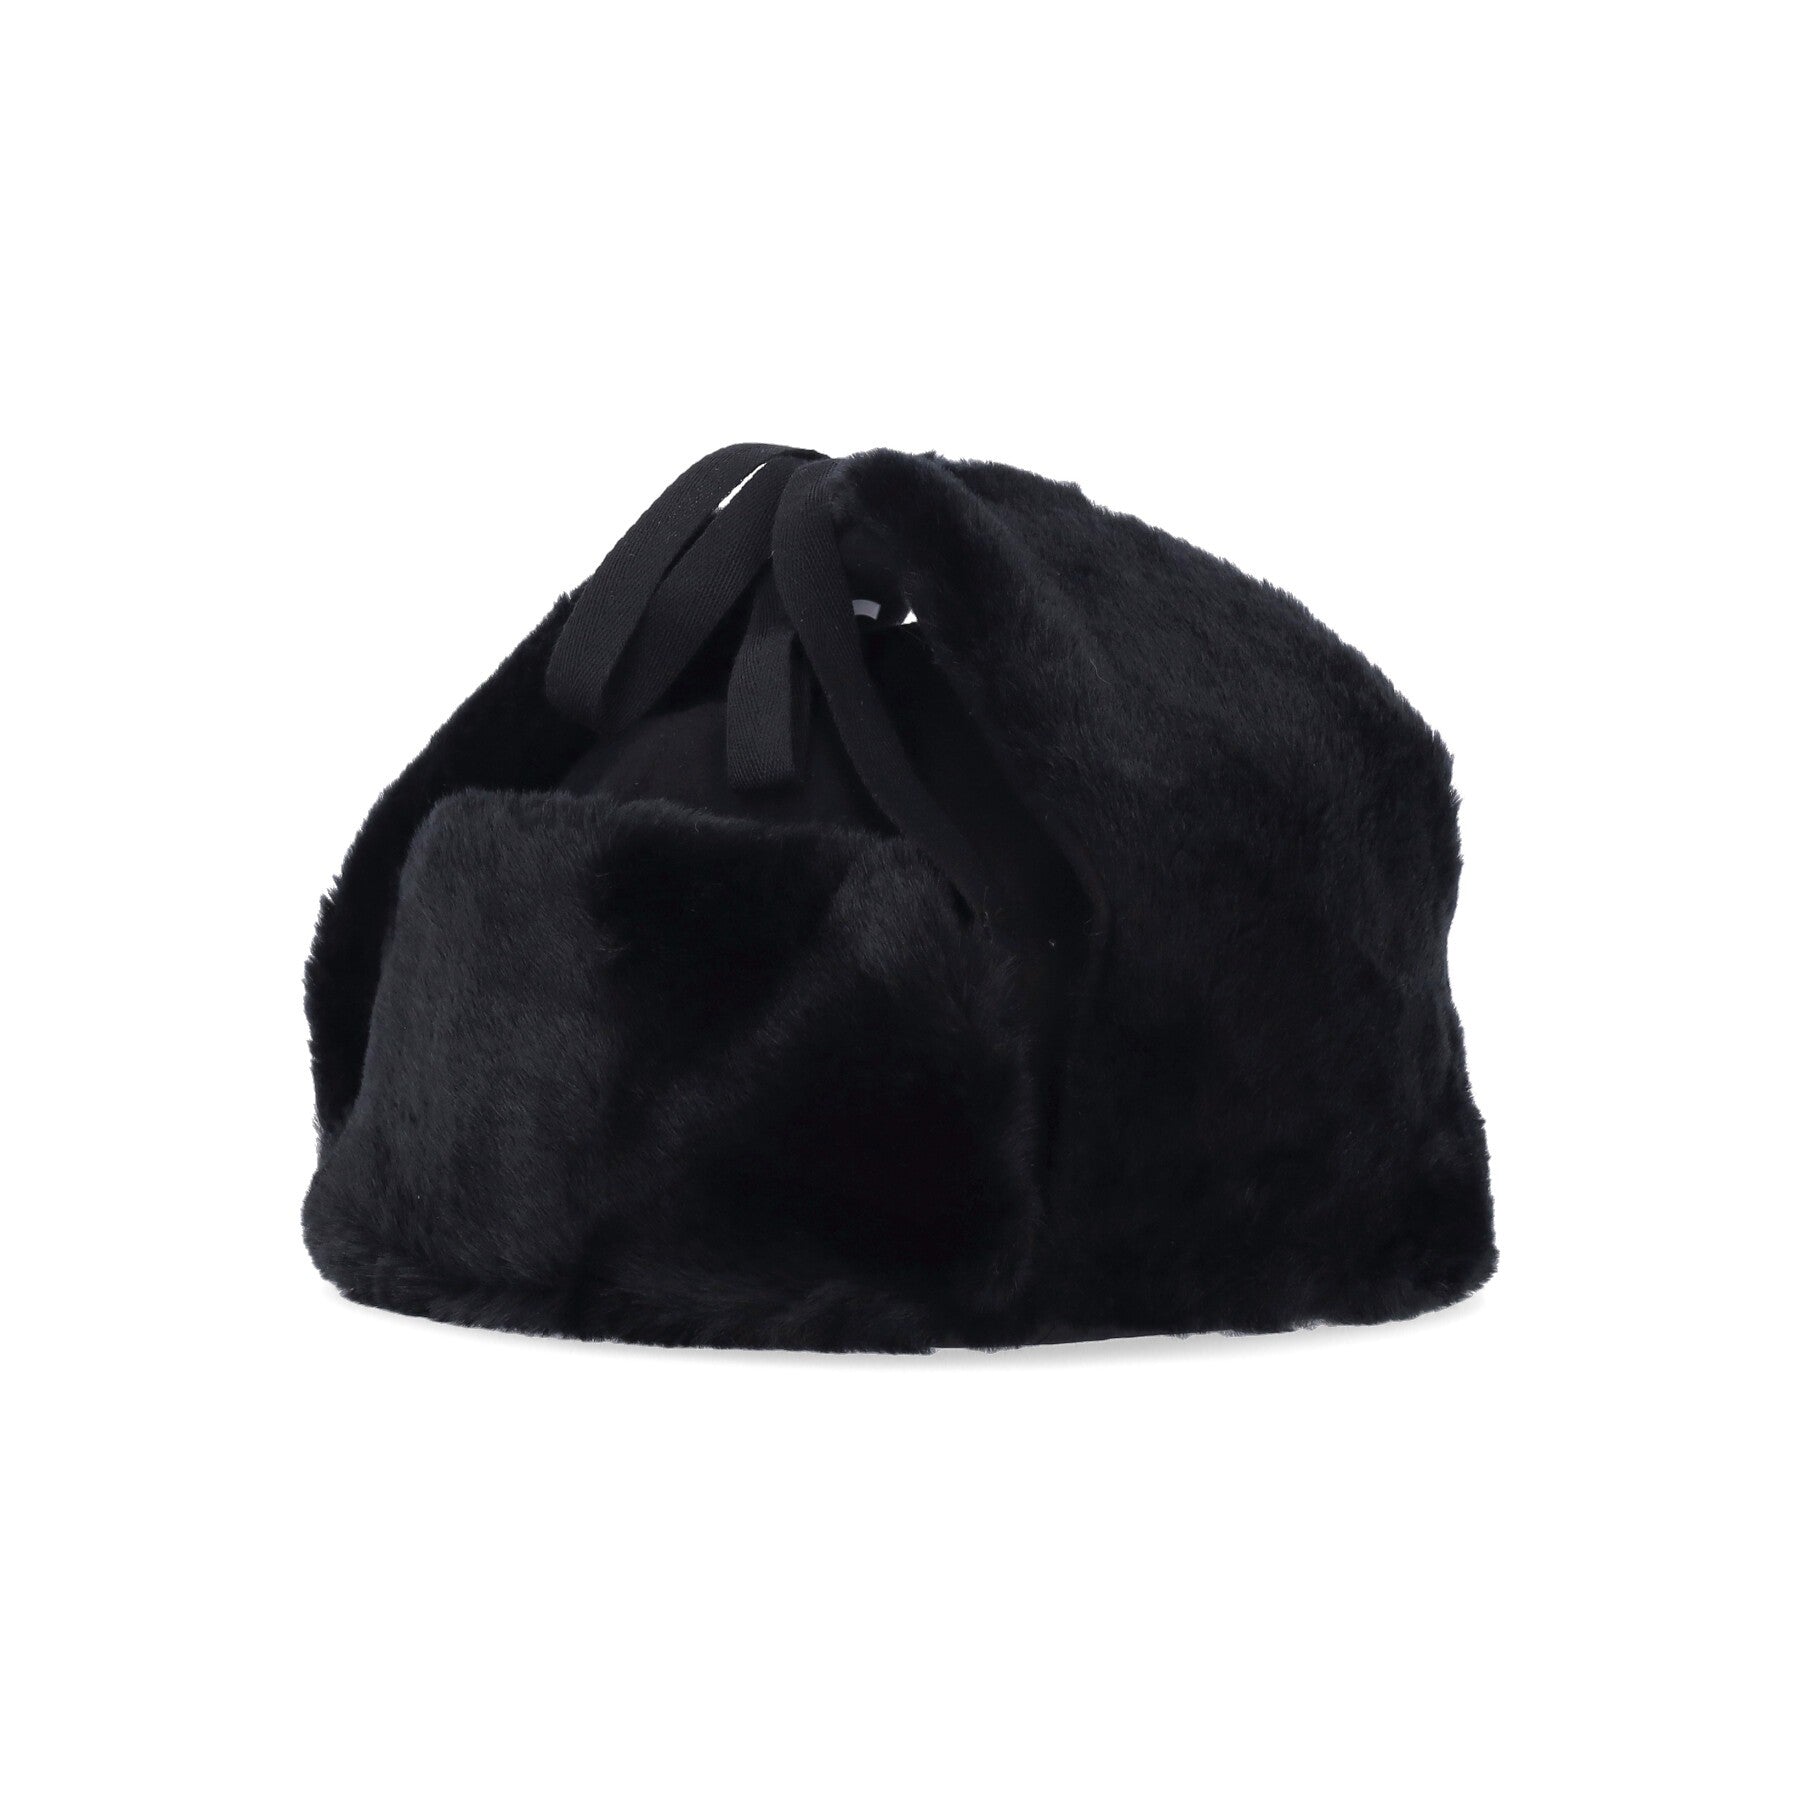 Men's Ushanka Black Hat